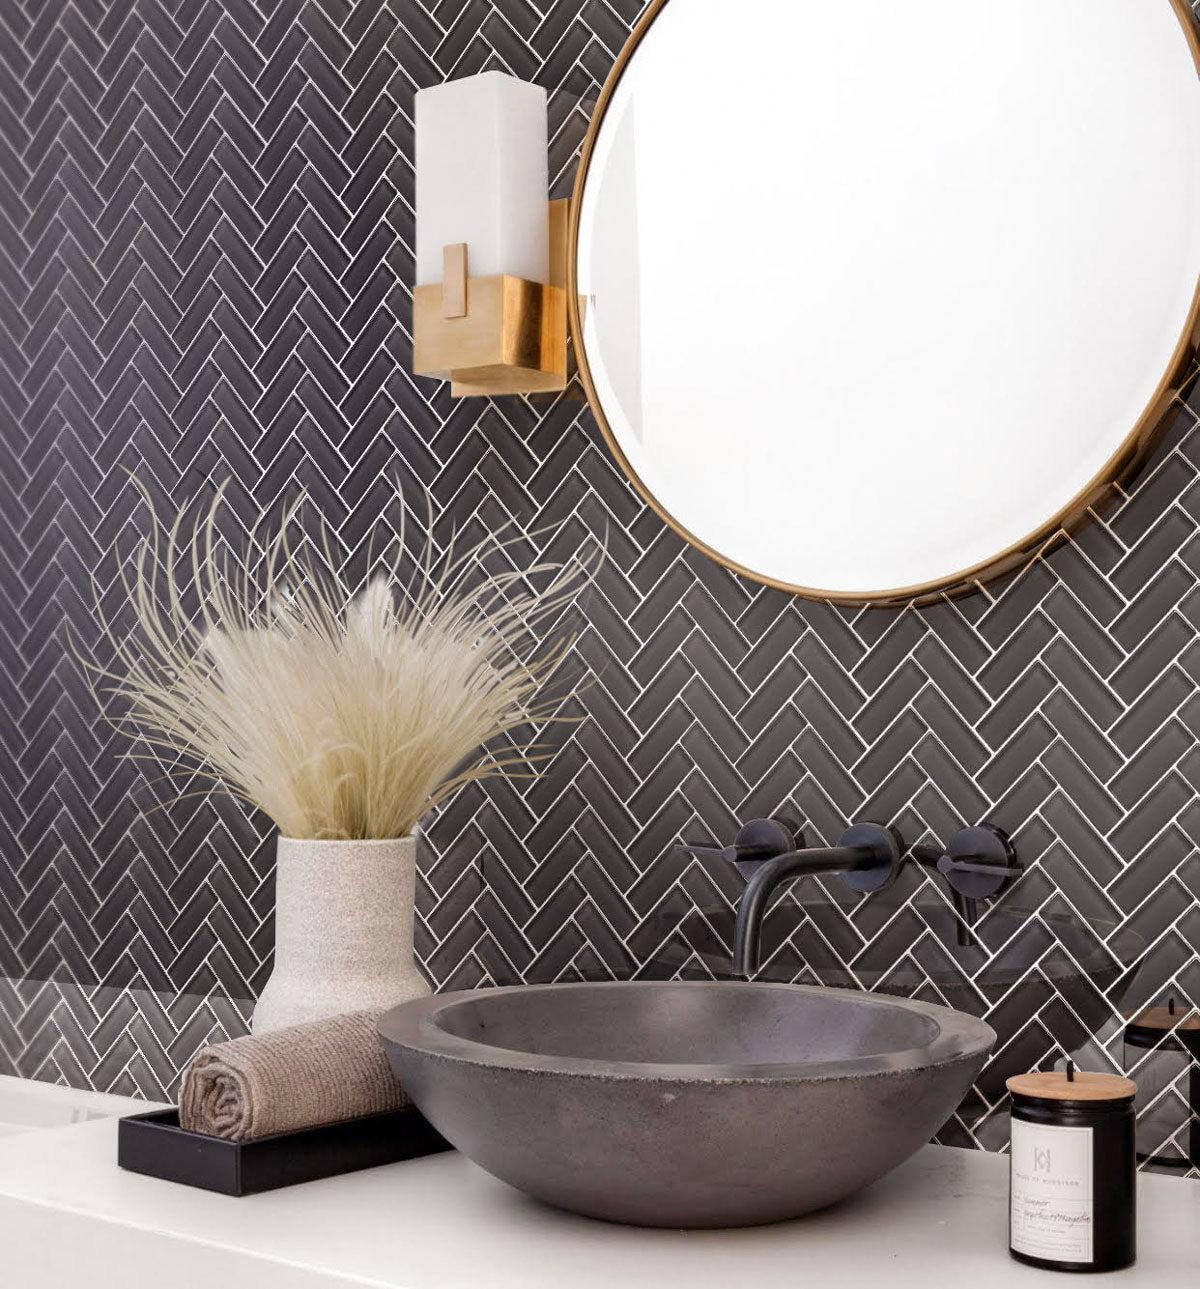 Dark Gray Herringbone Glass Tile bathroom with industrial finishes